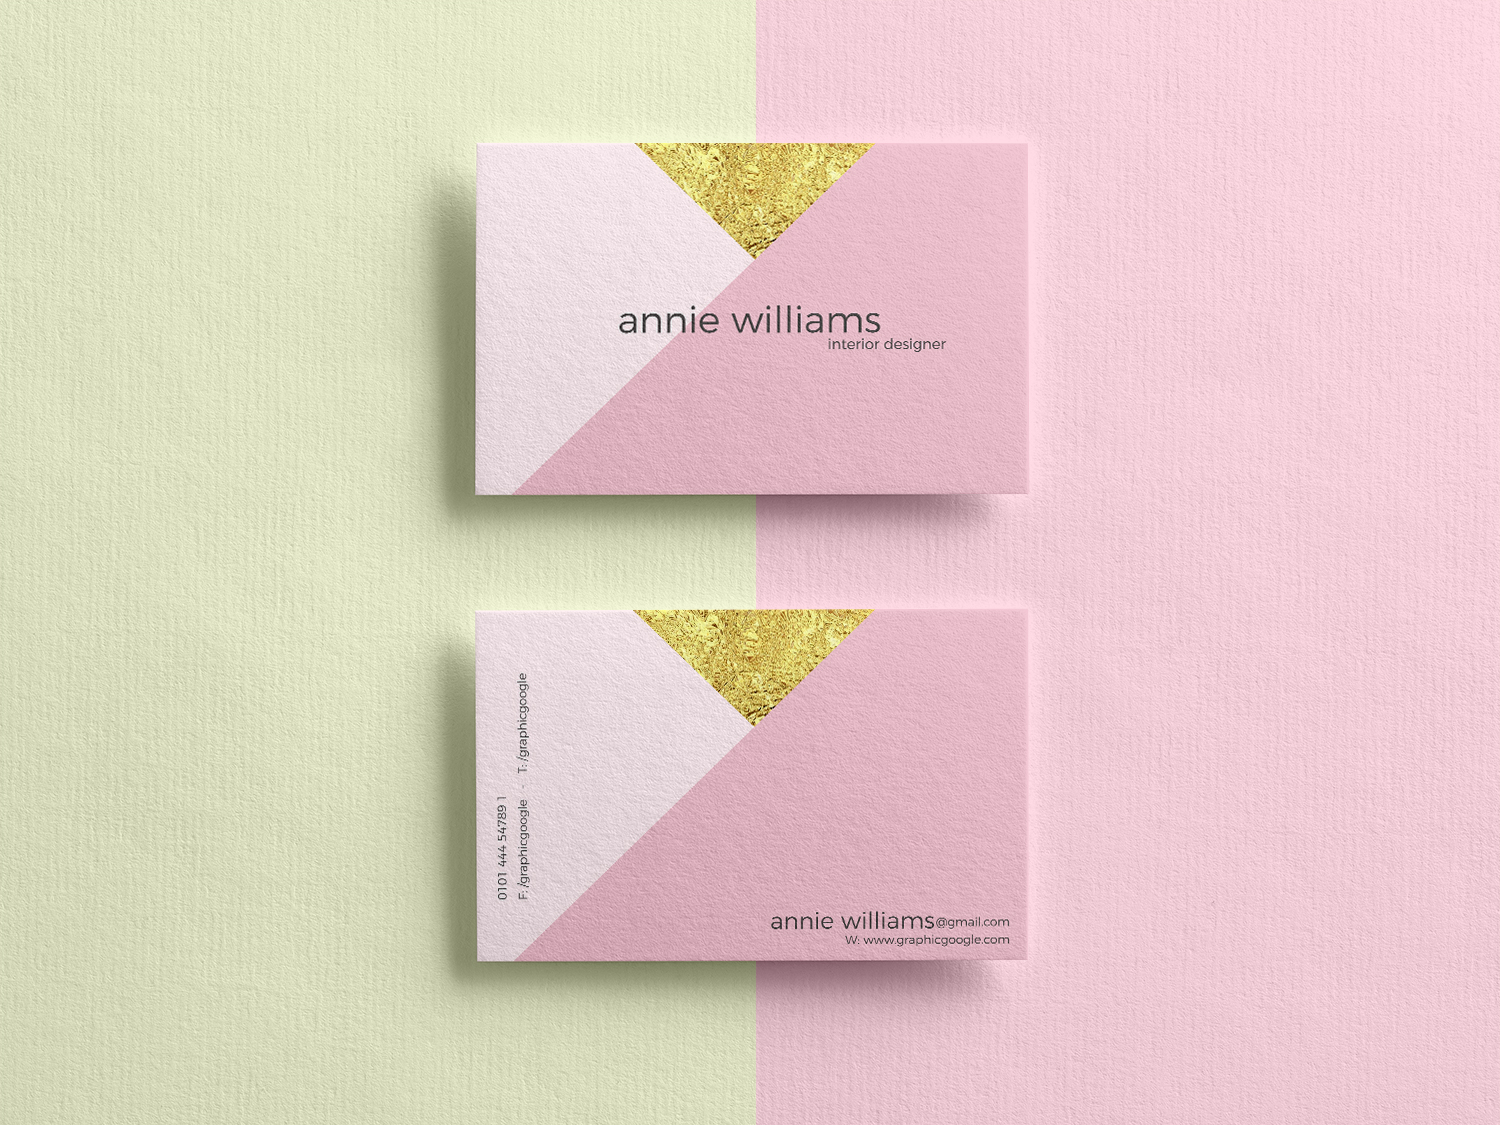 Free Elegant Texture Business Cards Mockup PSD